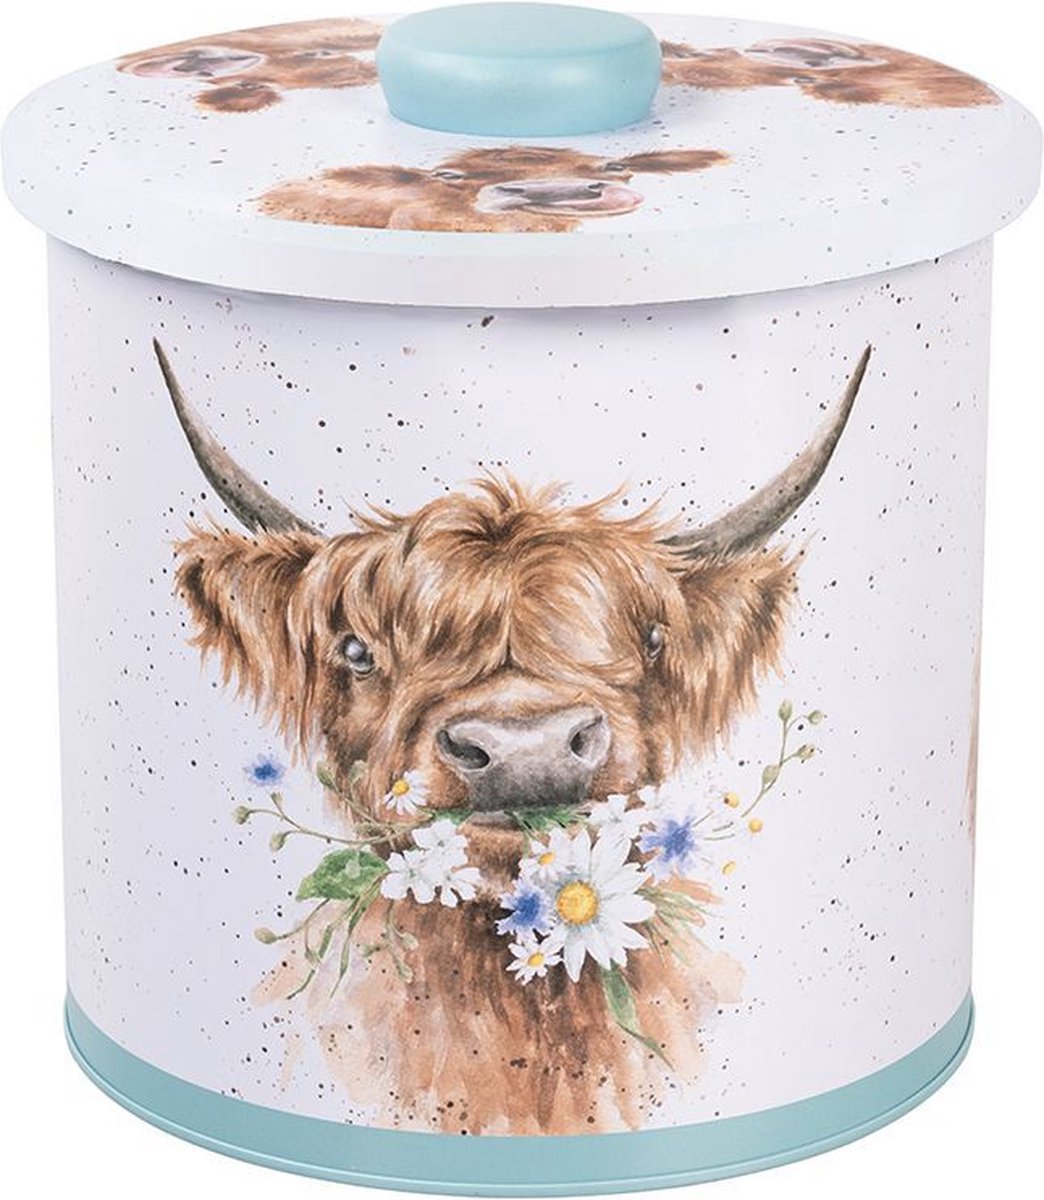 Voorraadblik - Wrendale Designs - Koektrommel Koe - 'The Country Set' Cow Biscuit Barrel